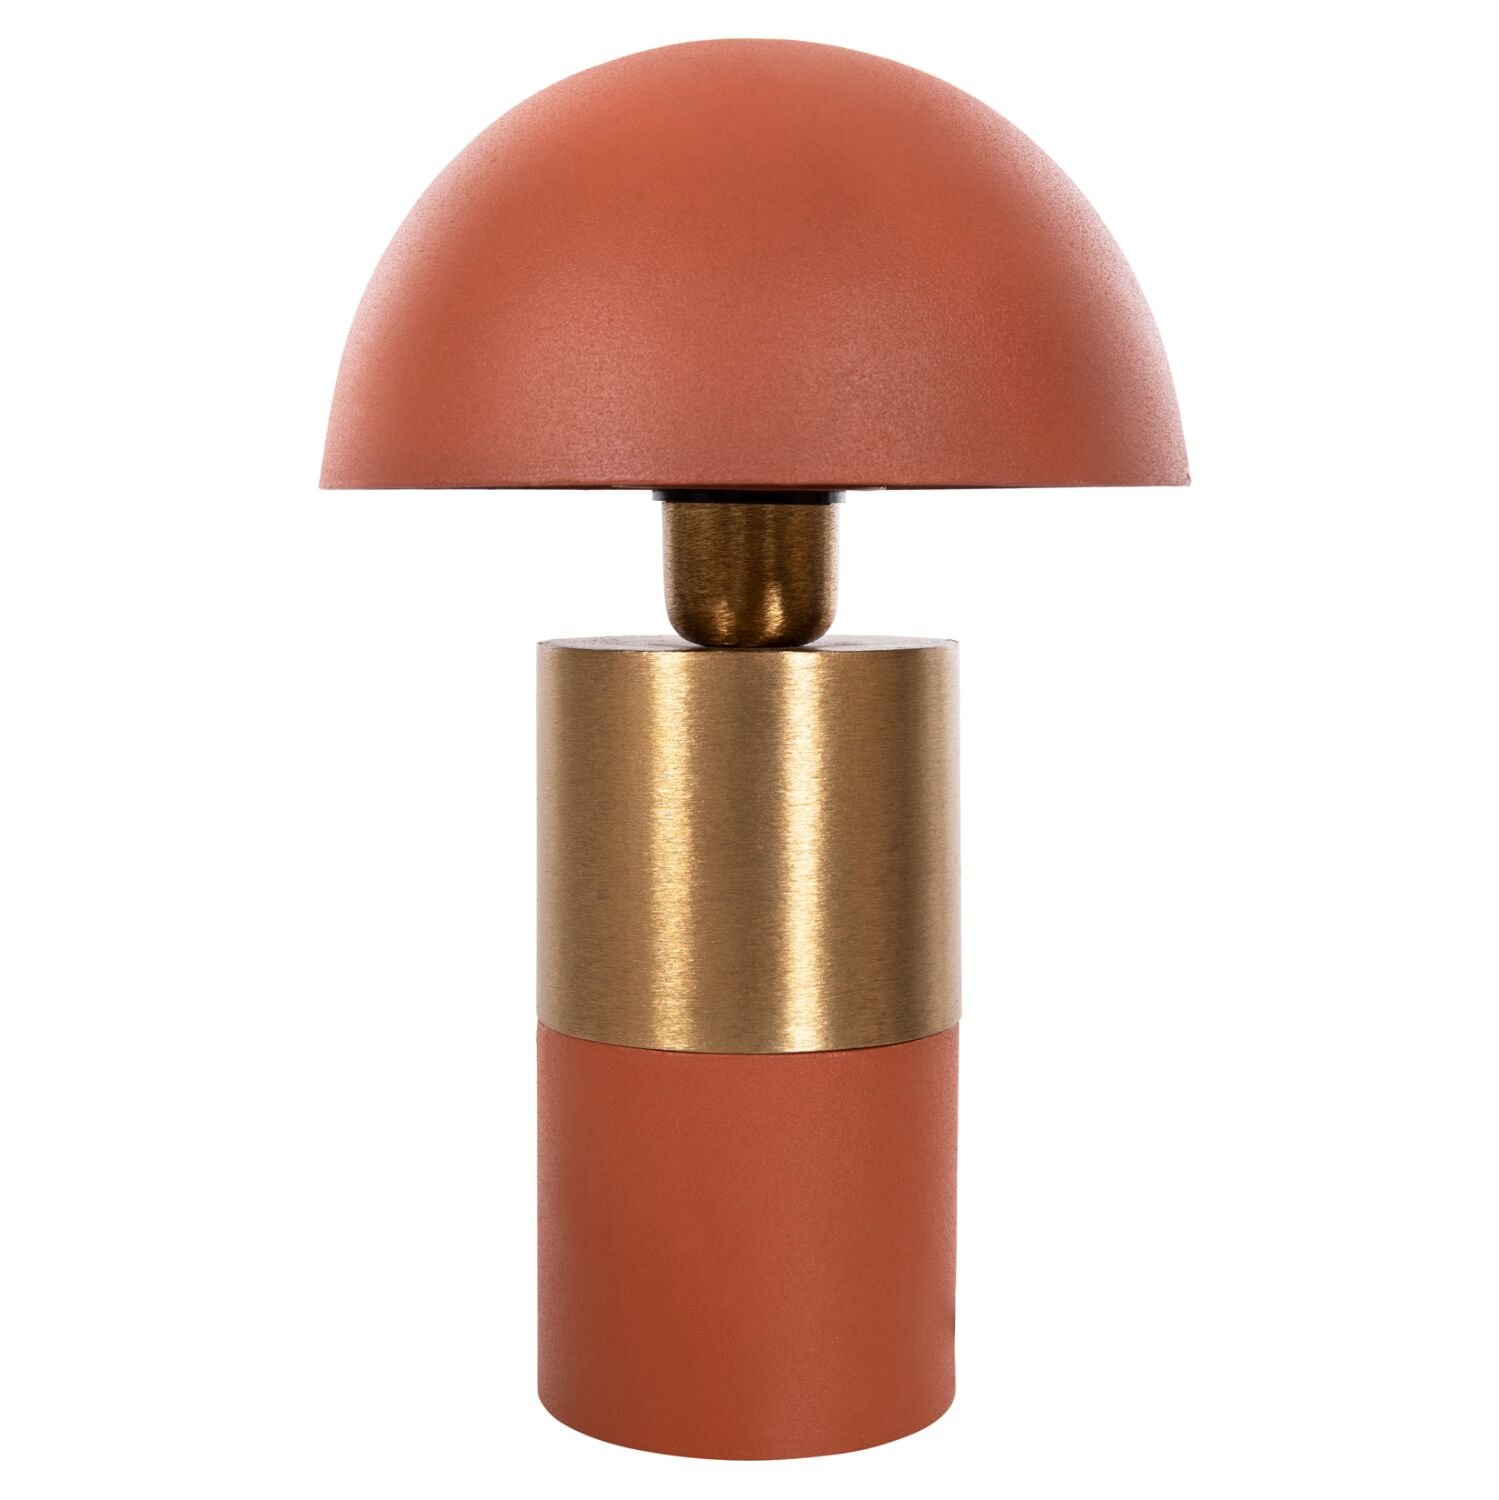 TABLE LAMP PUNE HM4245.08 METAL IN ORANGE-GOLD Φ20,5x32,5Hcm.